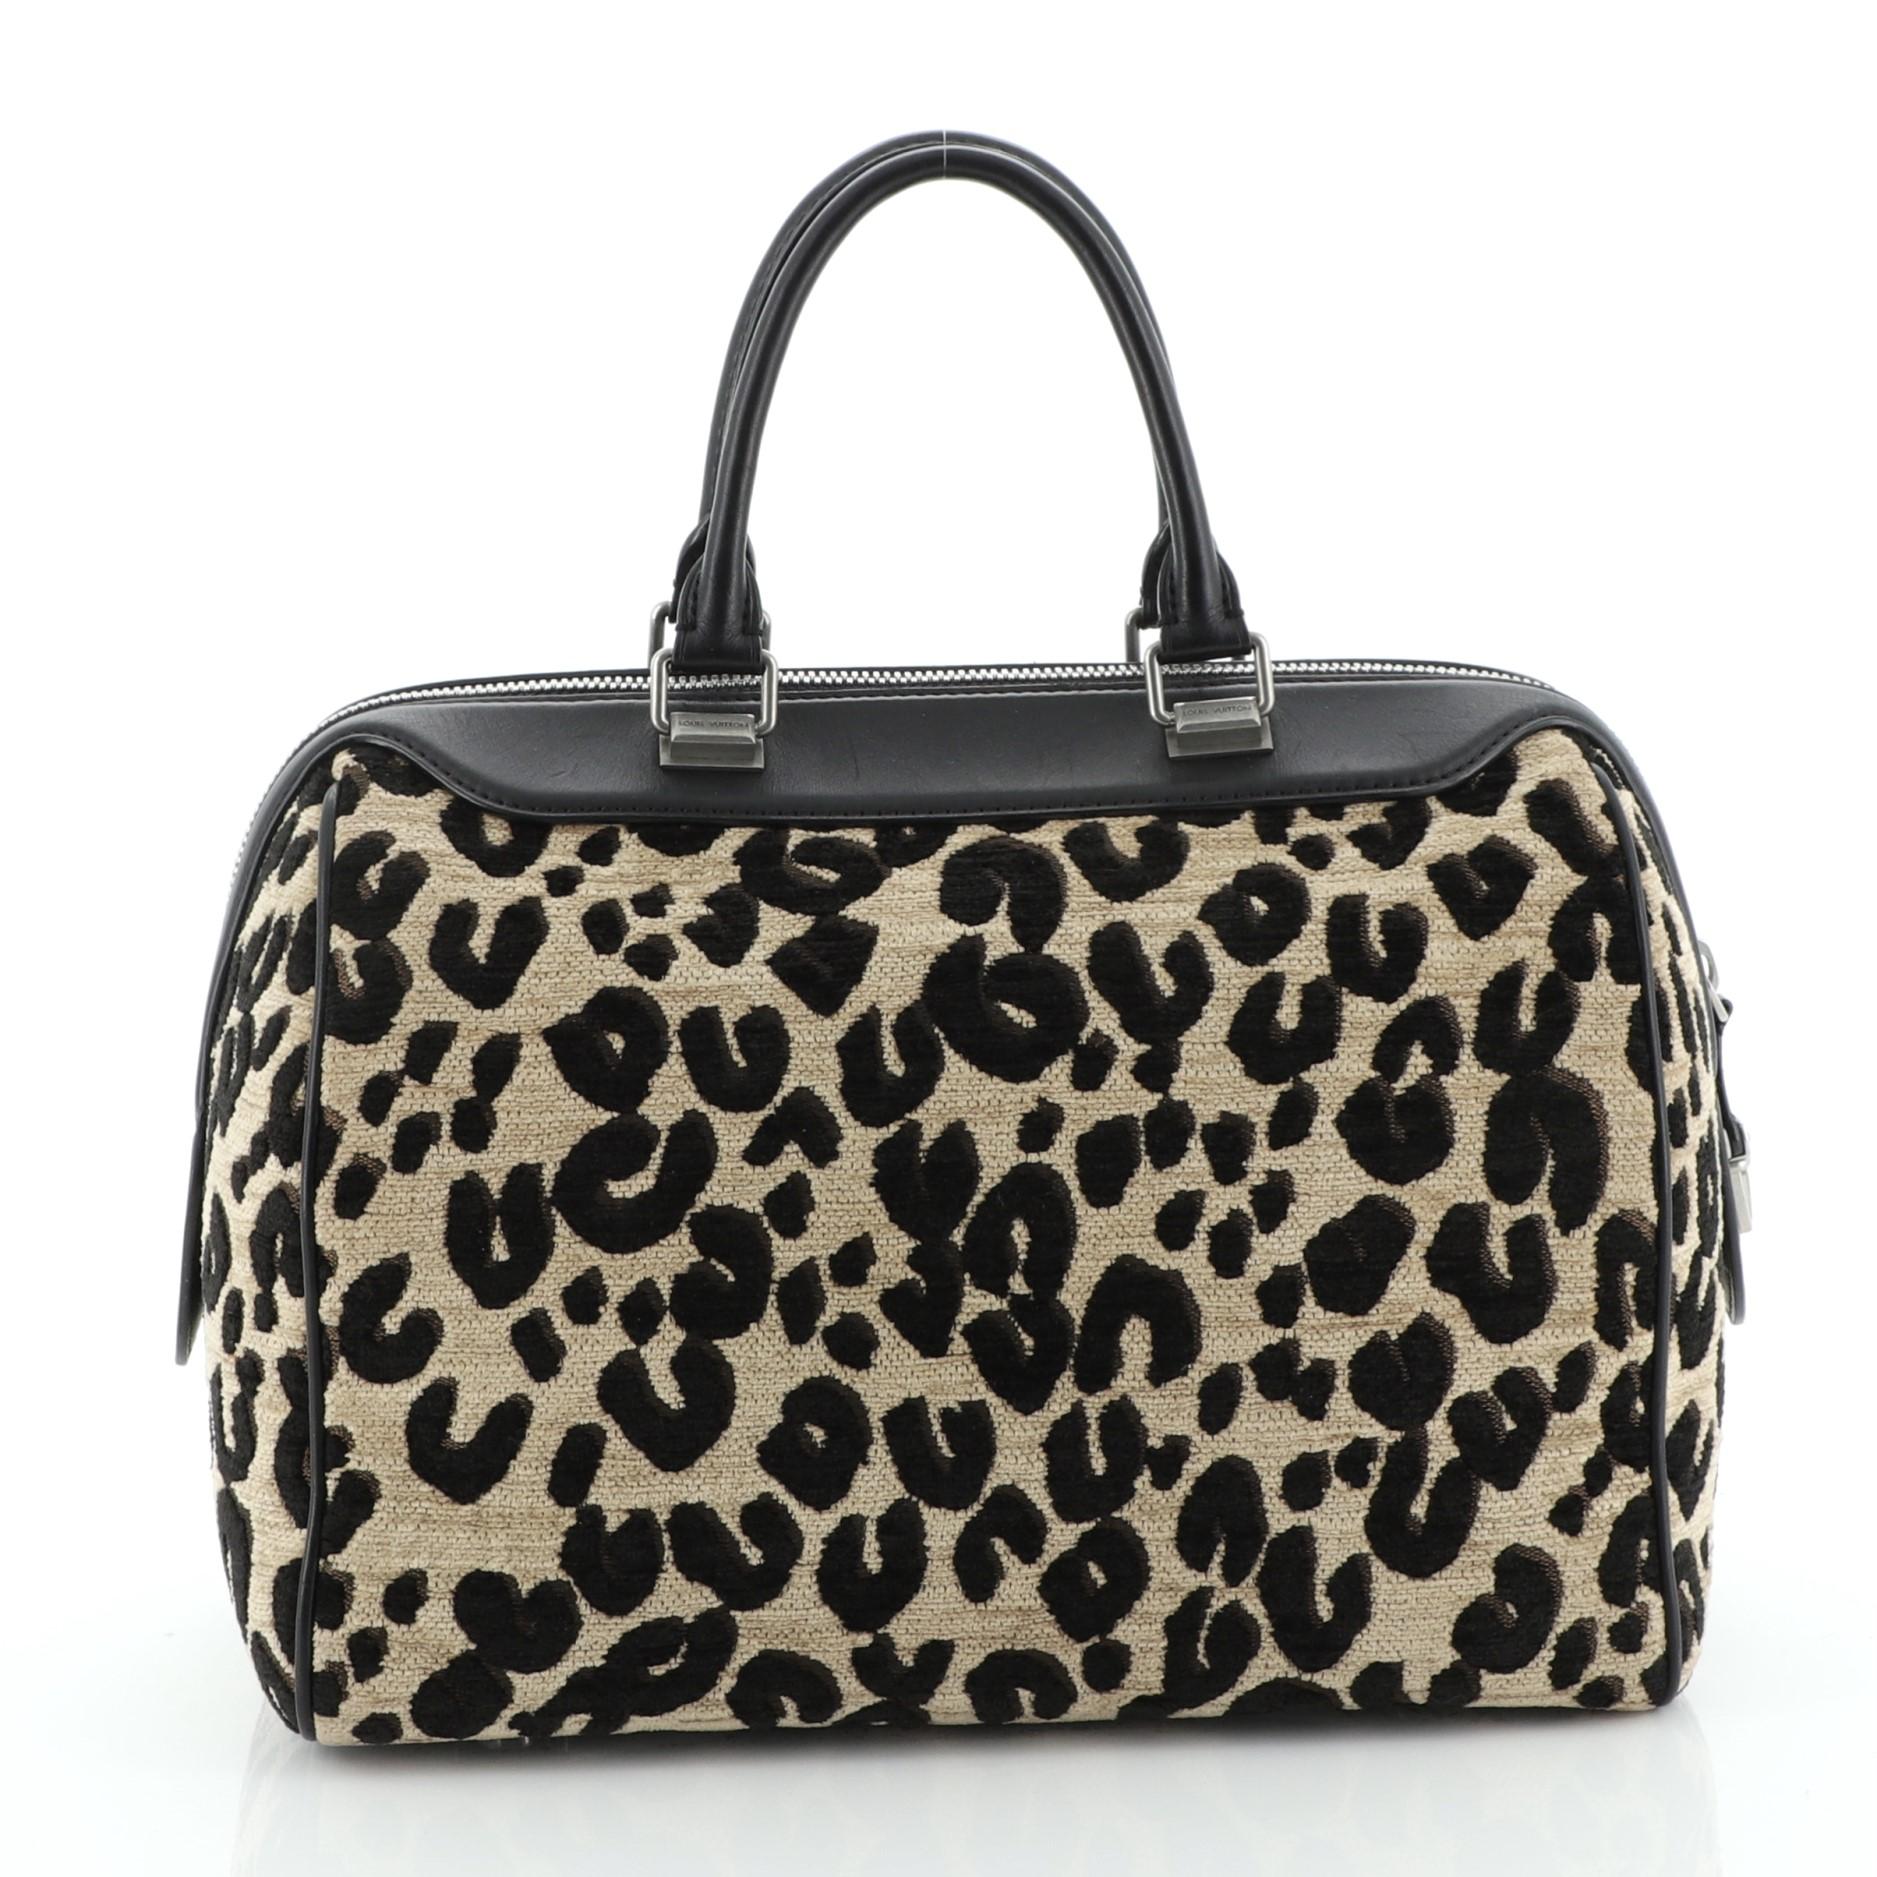 Black Louis Vuitton Speedy Handbag Limited Edition Stephen Sprouse Leopard Chenille